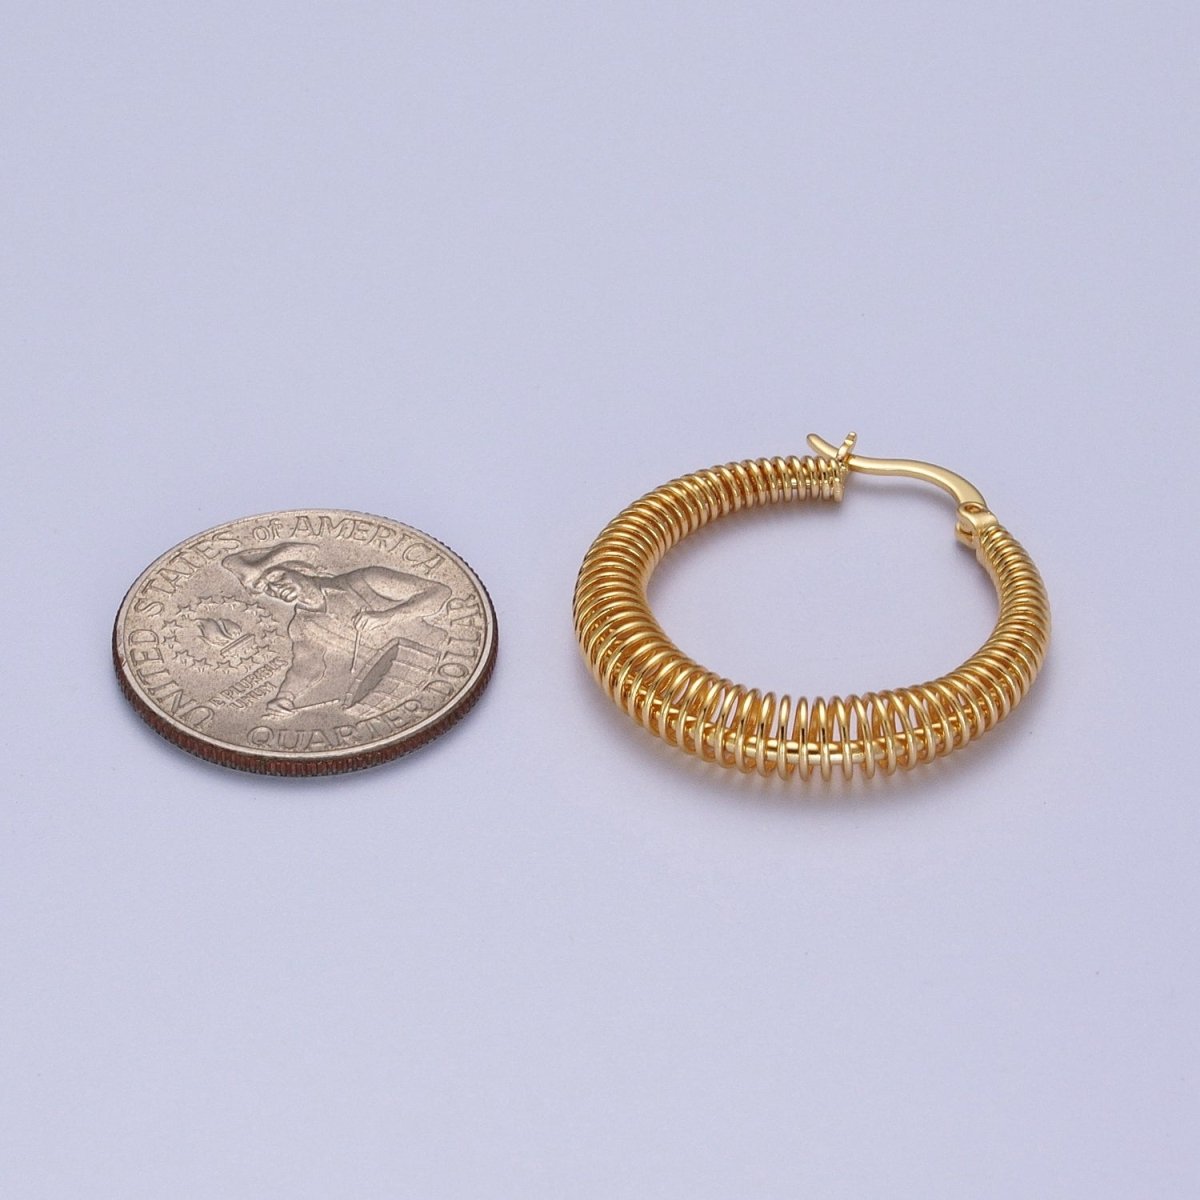 Gold Round Spiral Hoop Earring Statement Hoop Earrings Gold Rhombus Coil Earring AE-539 - DLUXCA